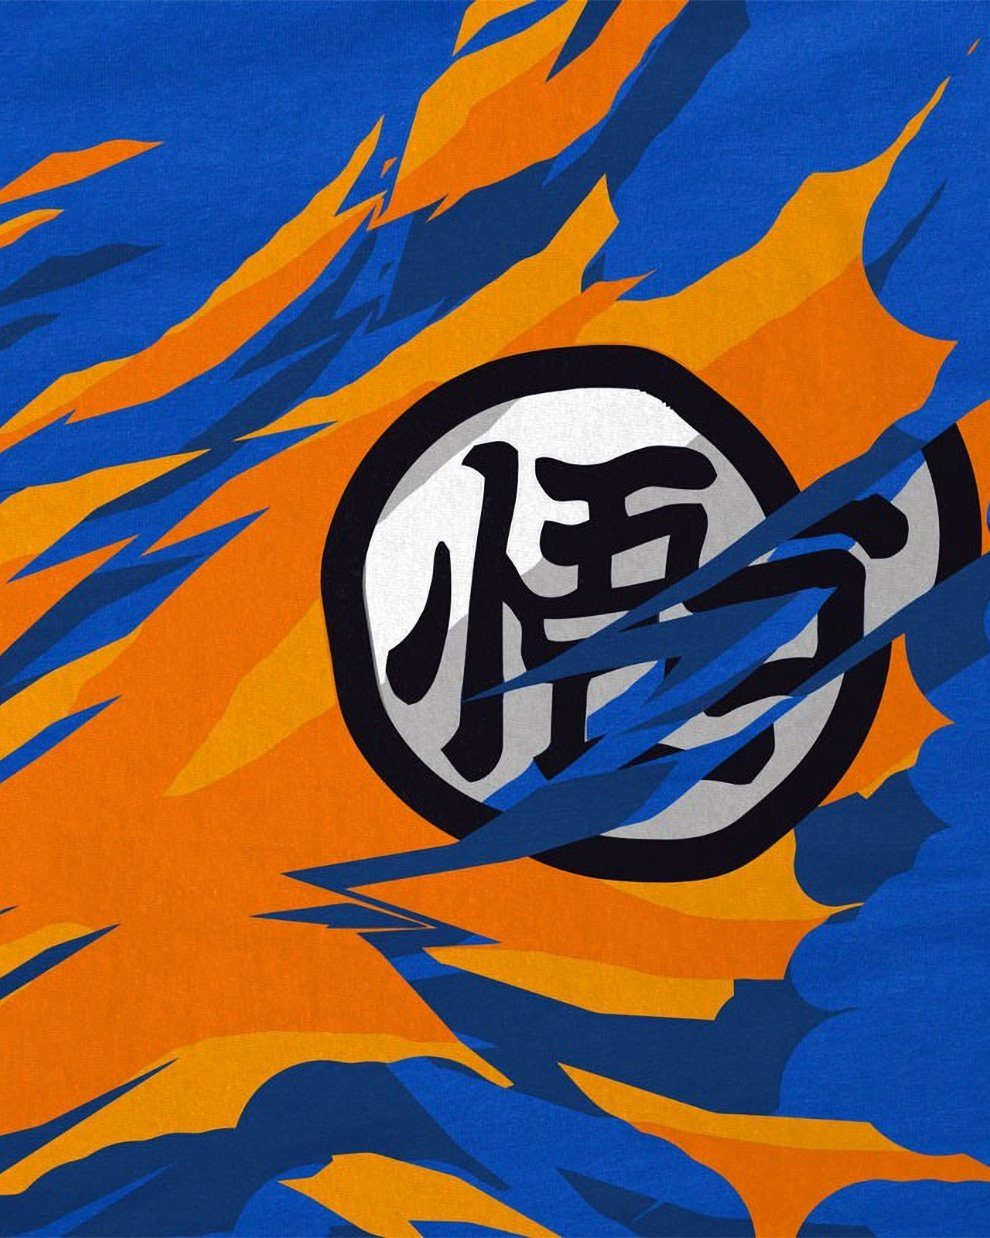 dragon style3 blau super Goku songoku ball T-Shirt japan super vegeta saiyan Print-Shirt Herren Brust z